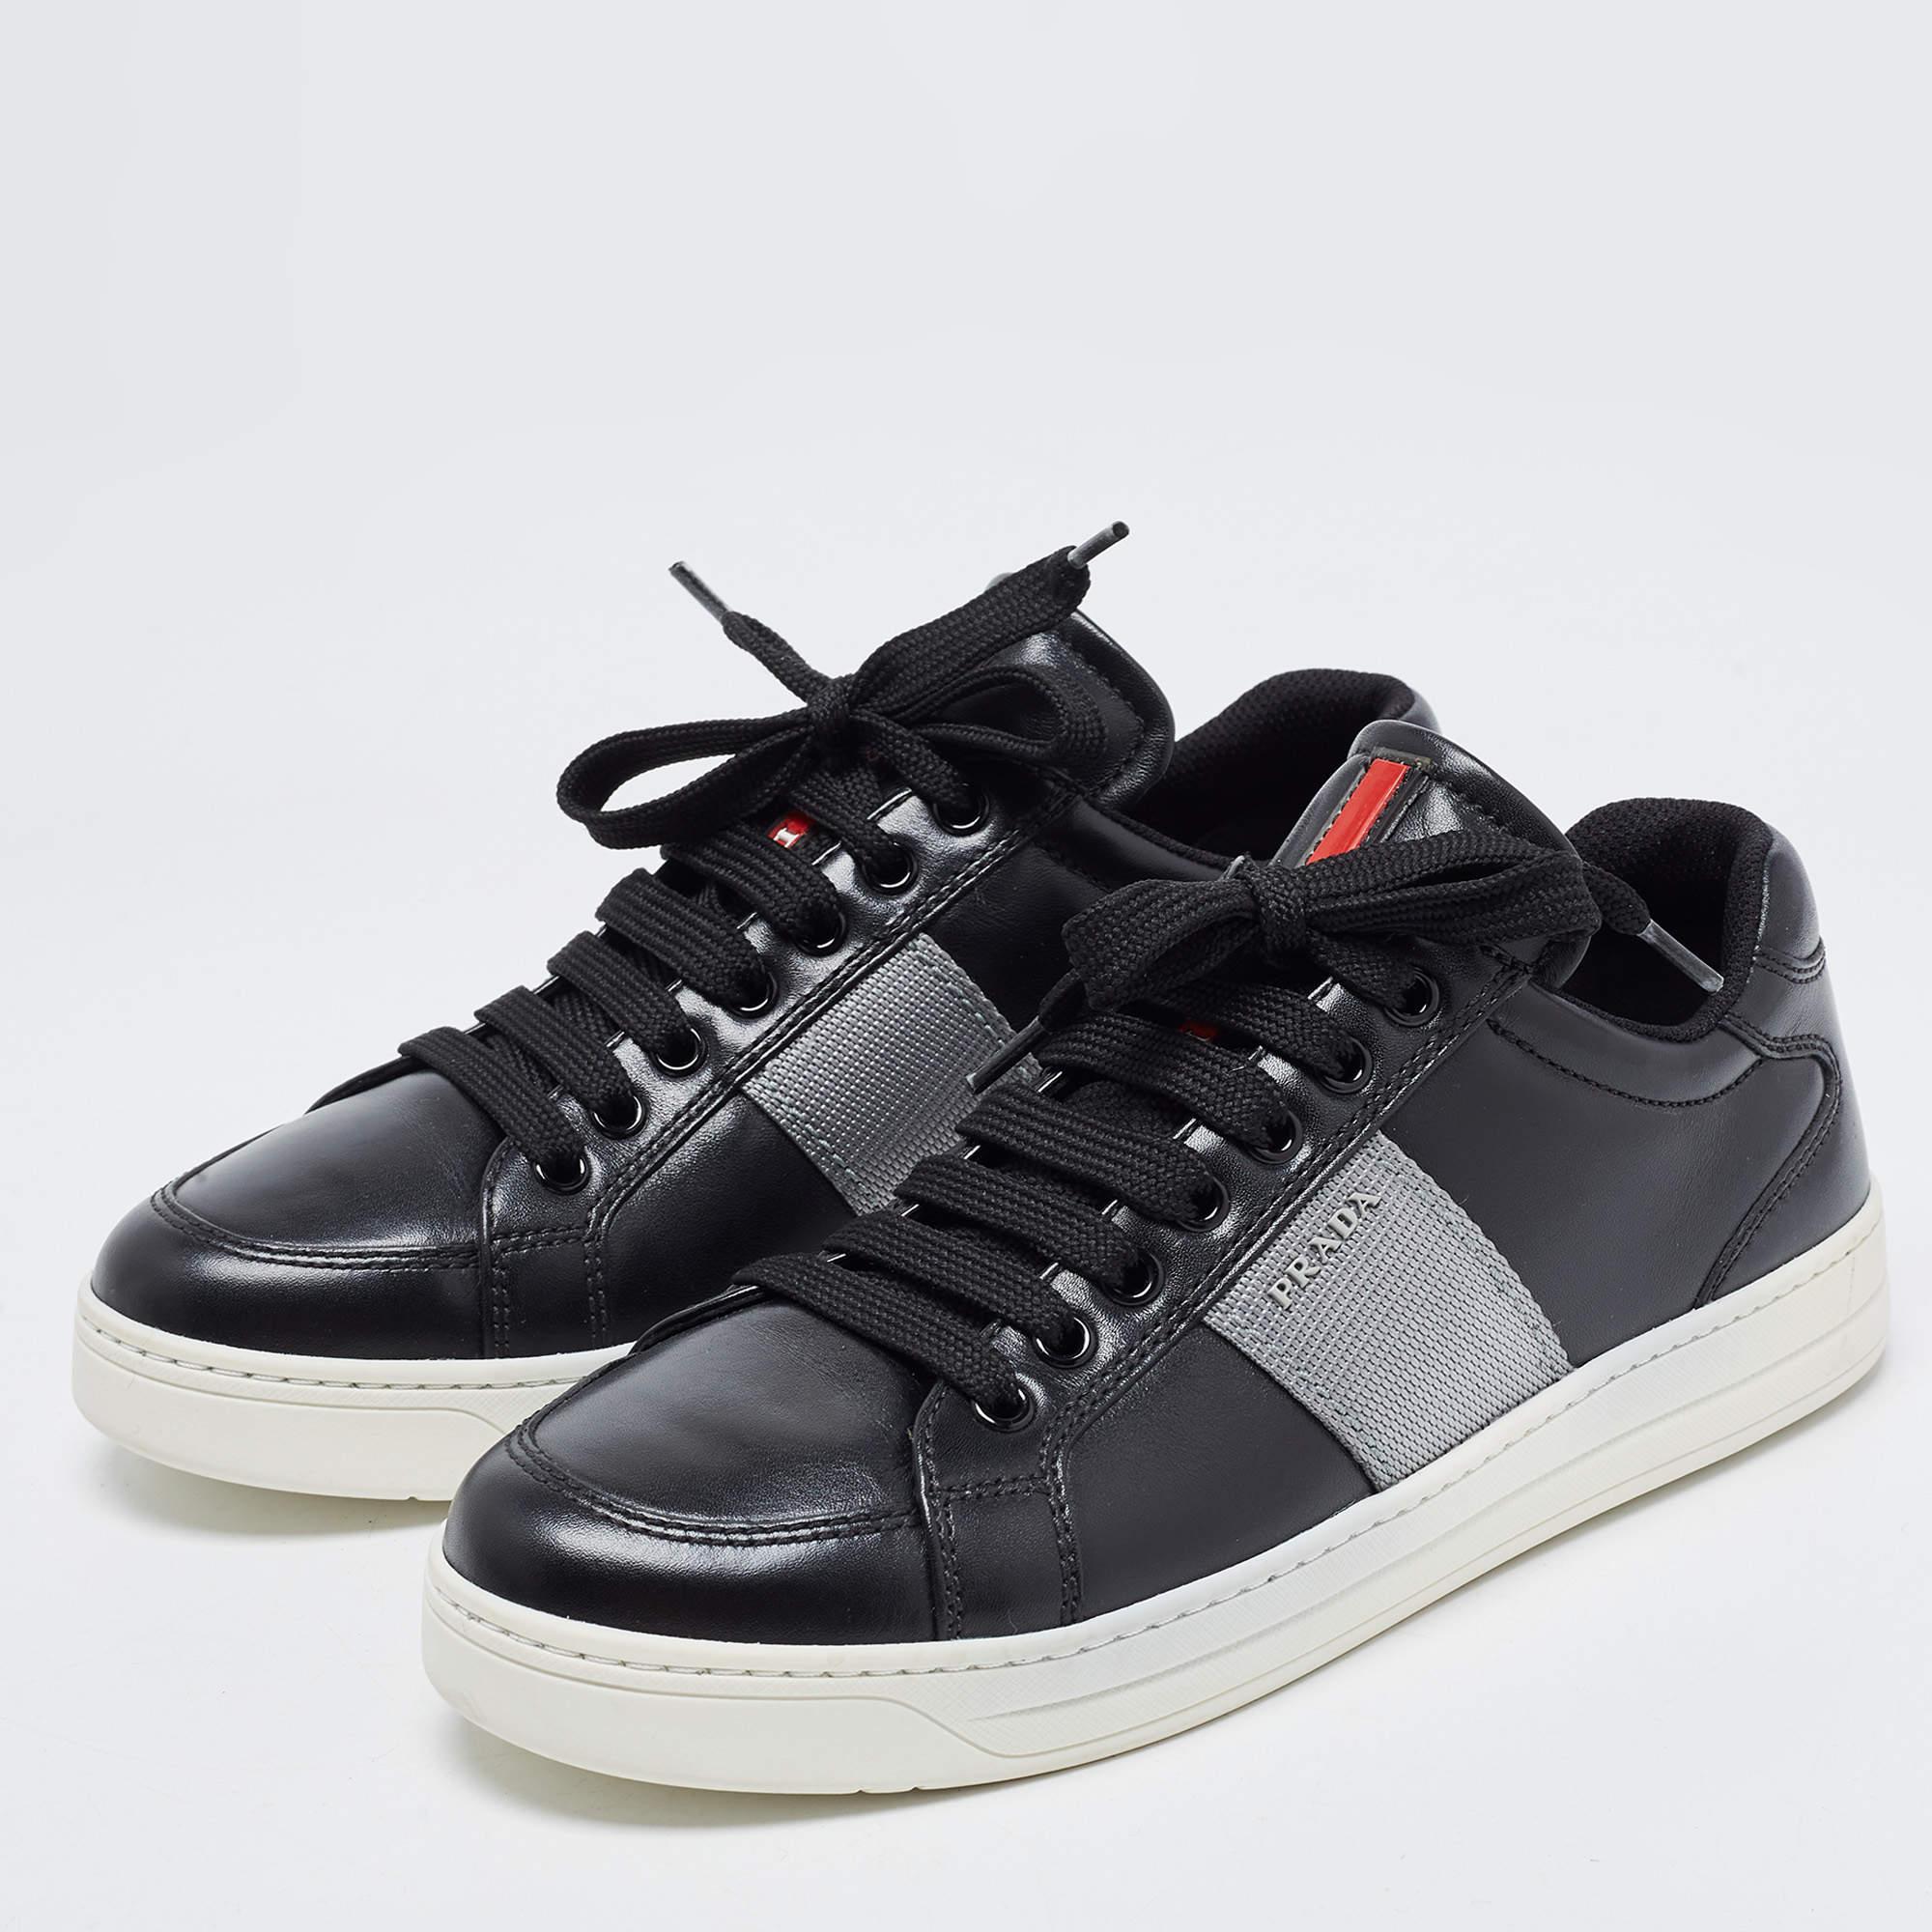 Prada Black Leather Low Top Sneakers Size 38 1